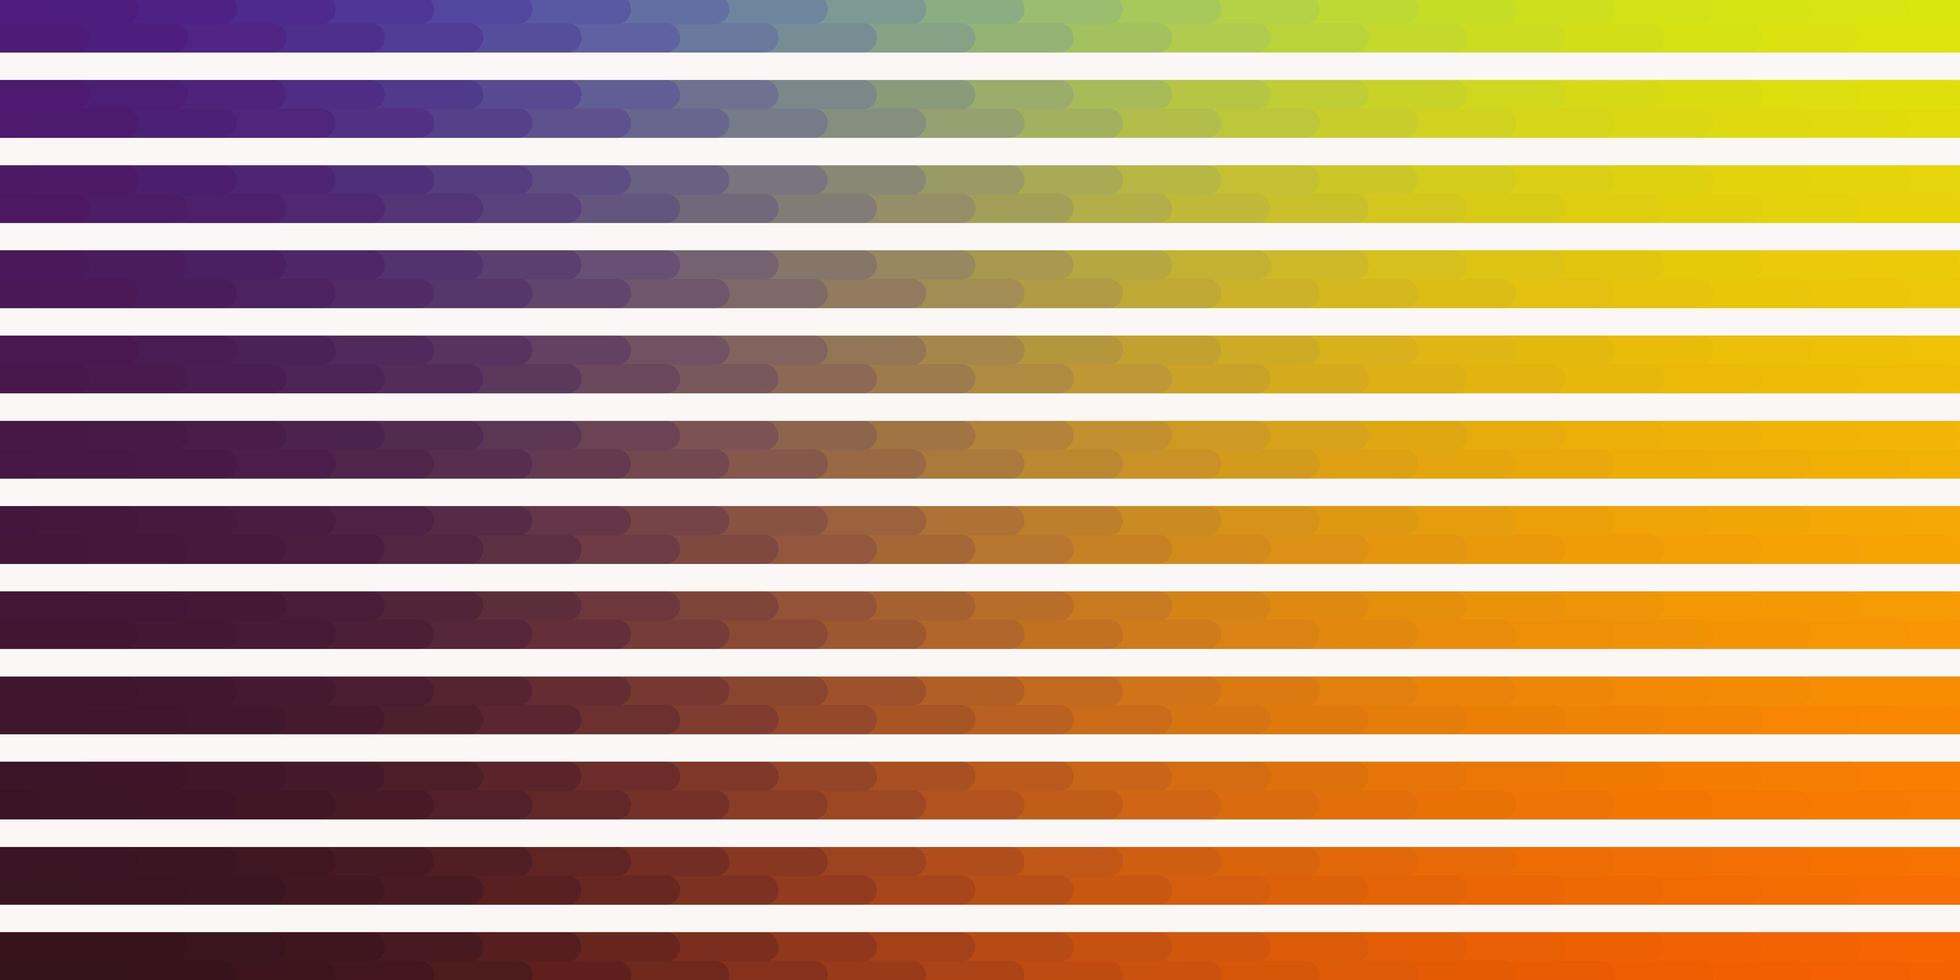 luz de fundo vector multicolor com linhas.